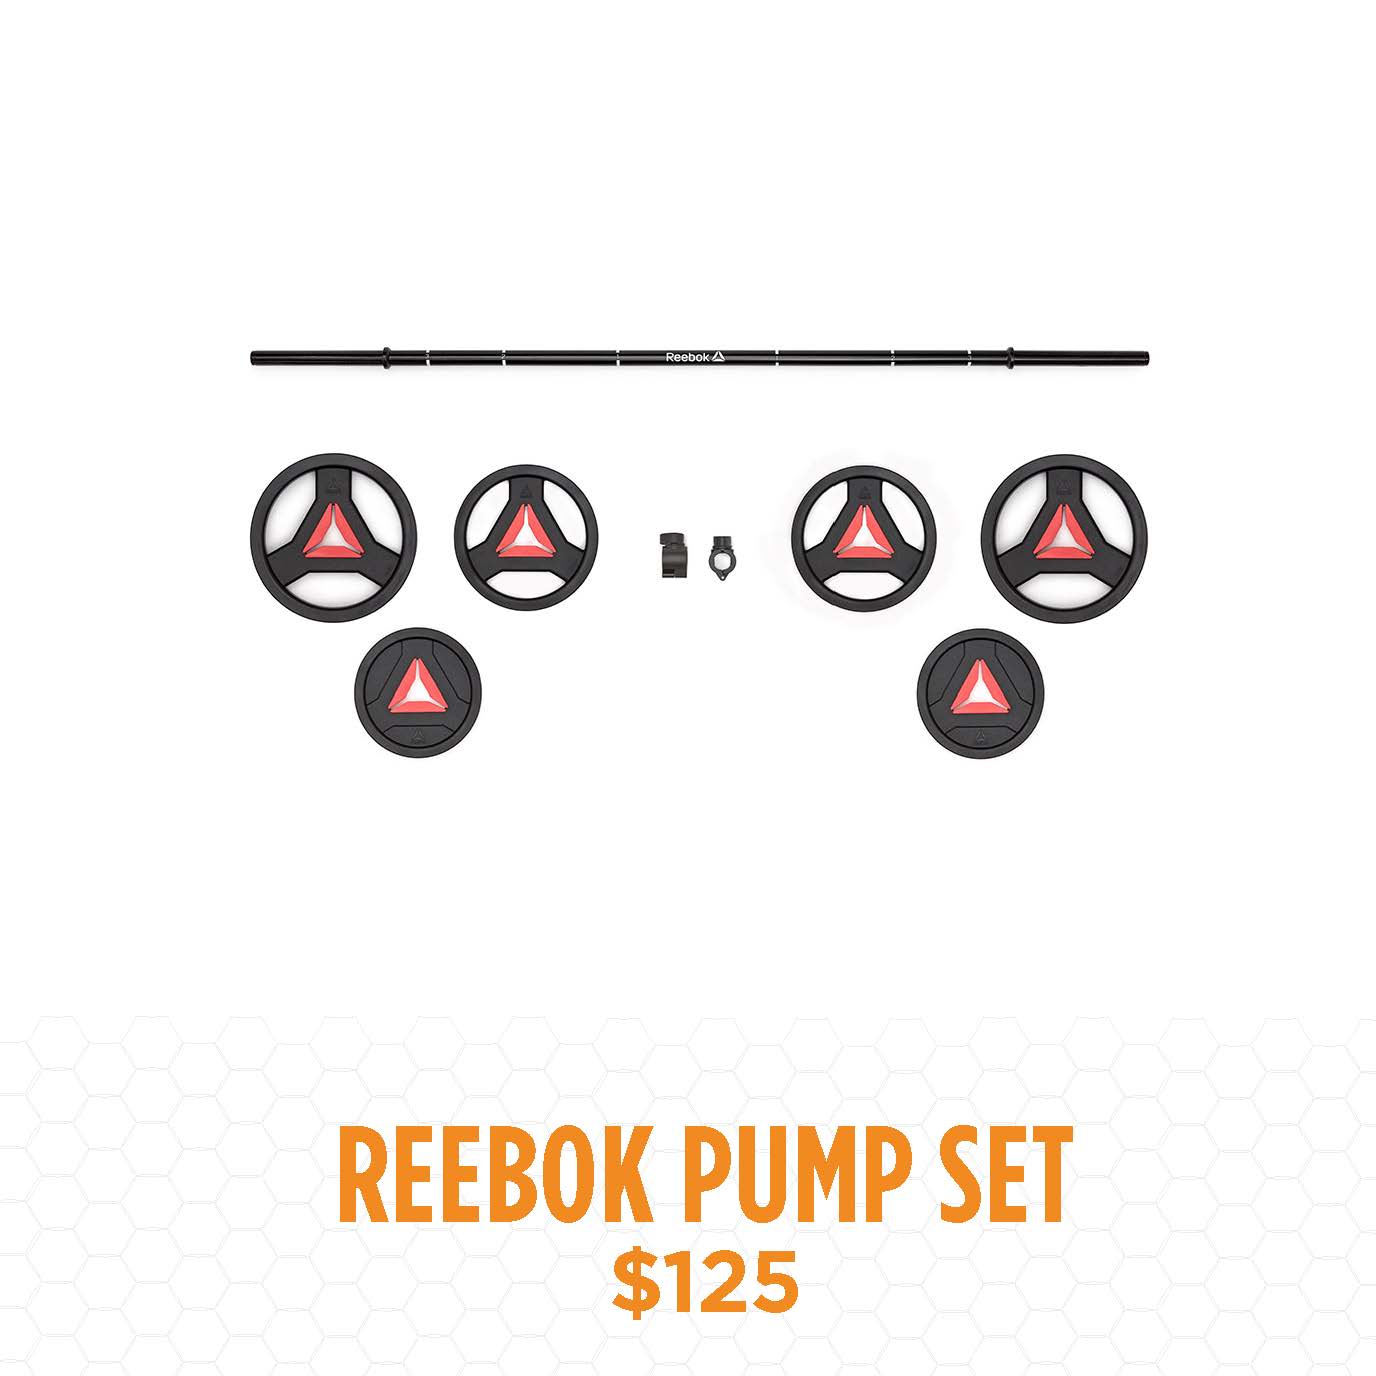 reebok pump set